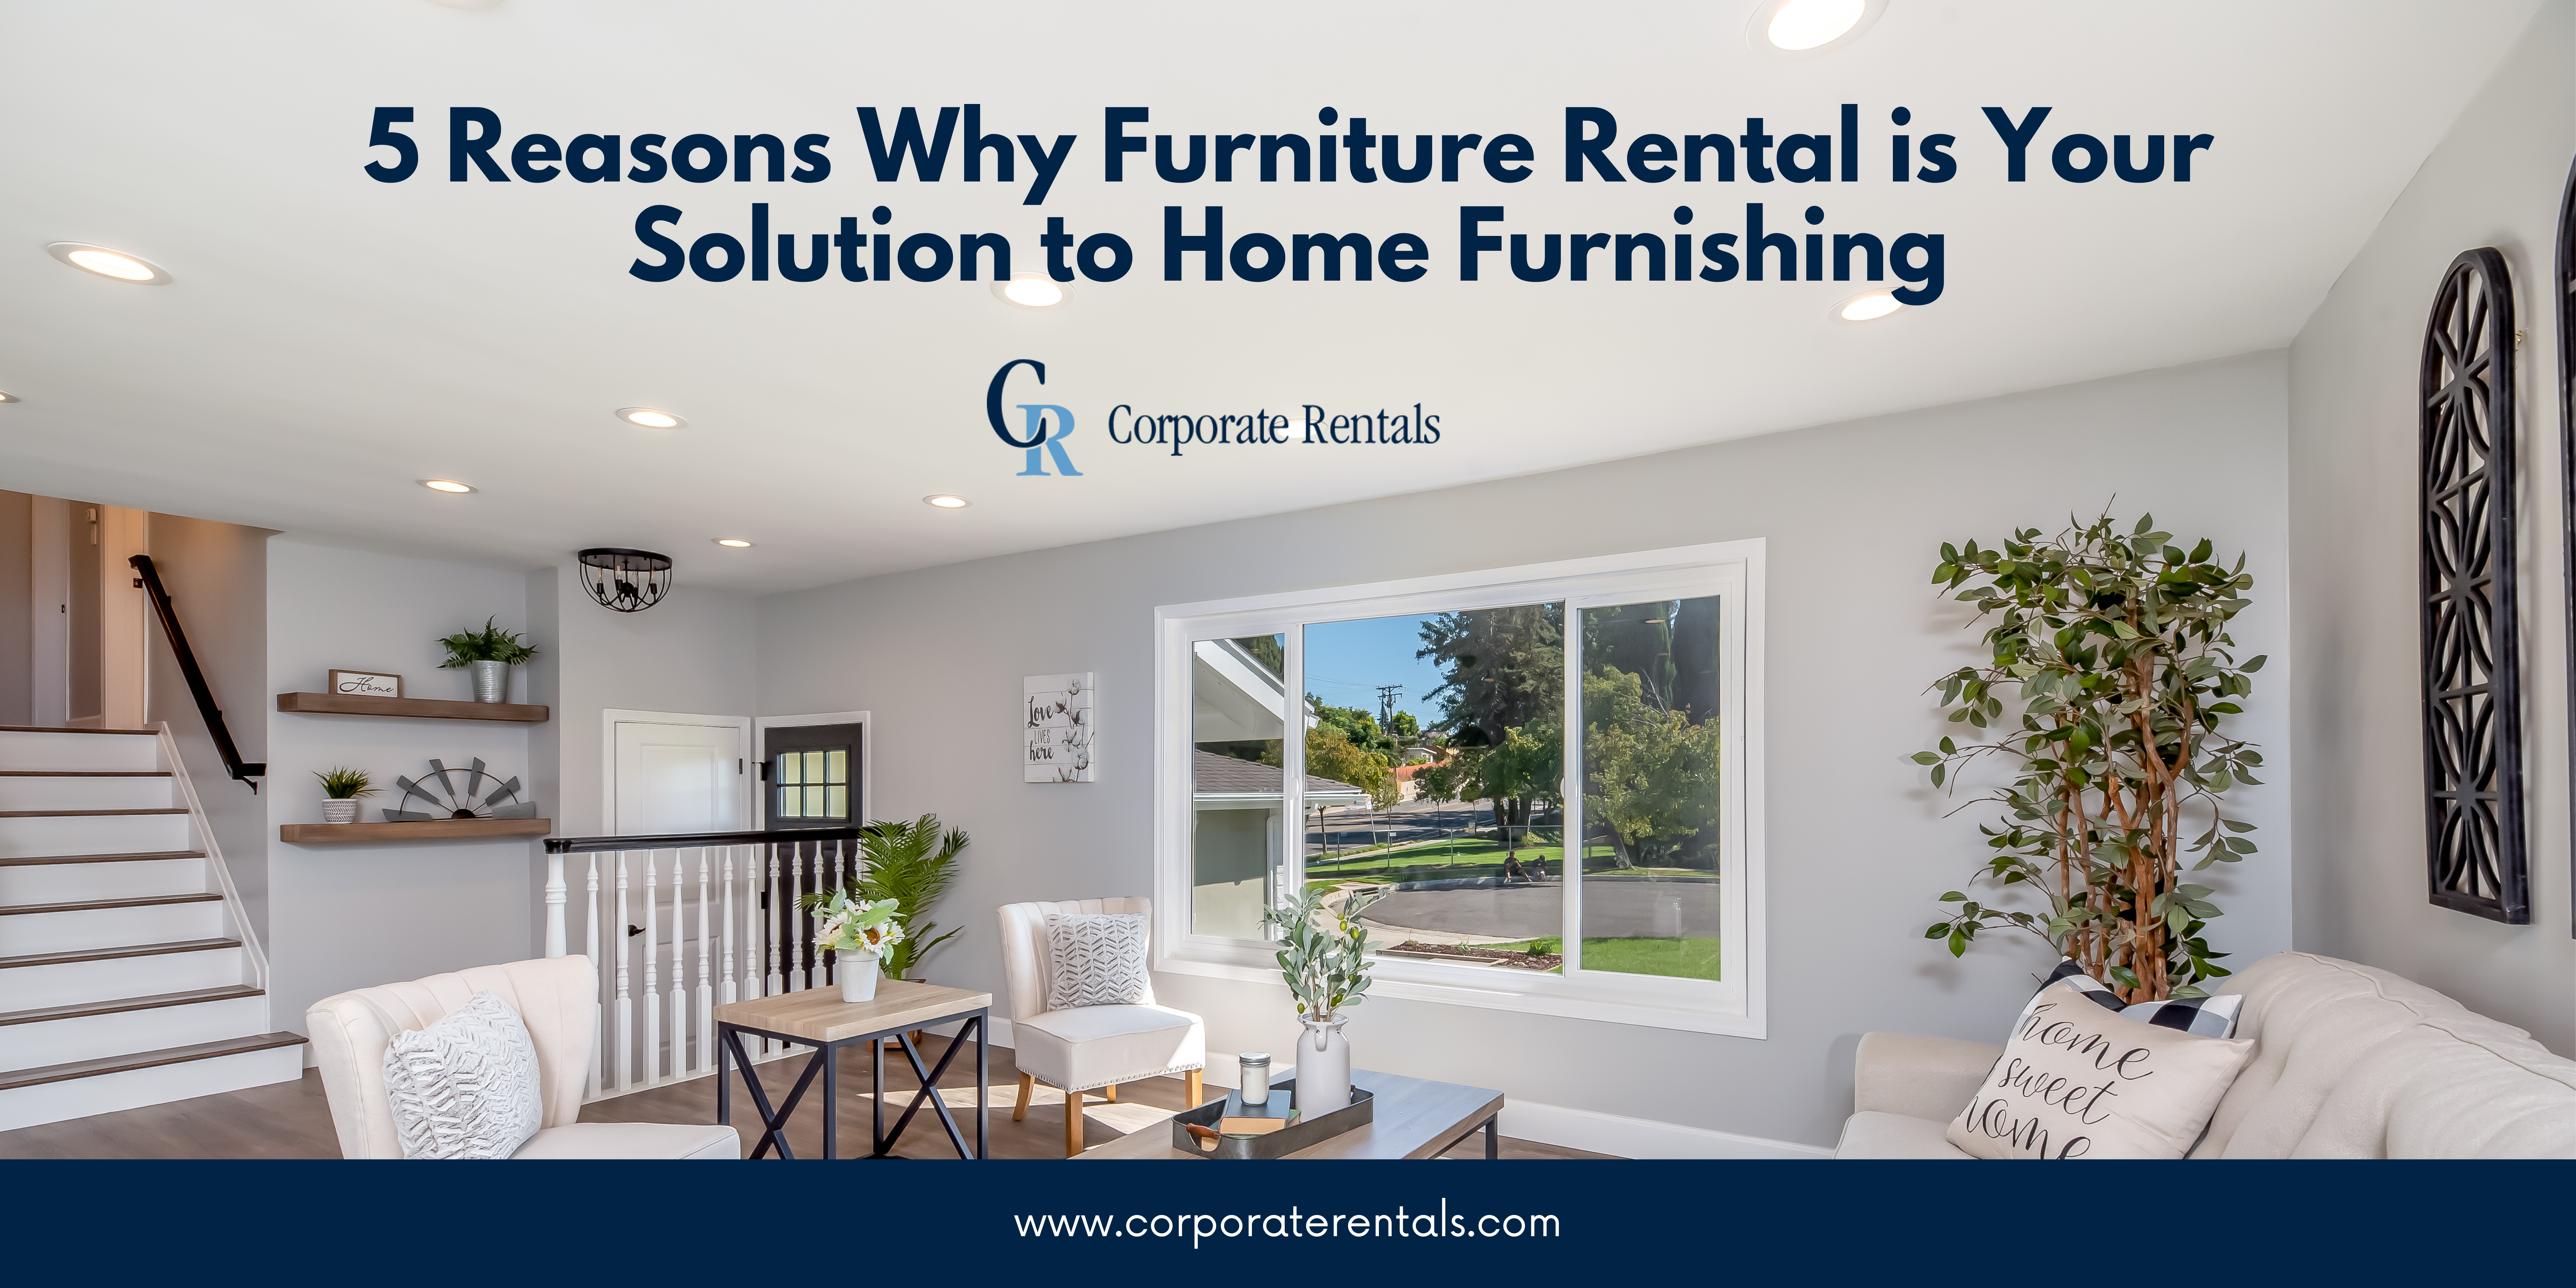 5 Reasons To Choose Furniture Rental for Home Furnishing